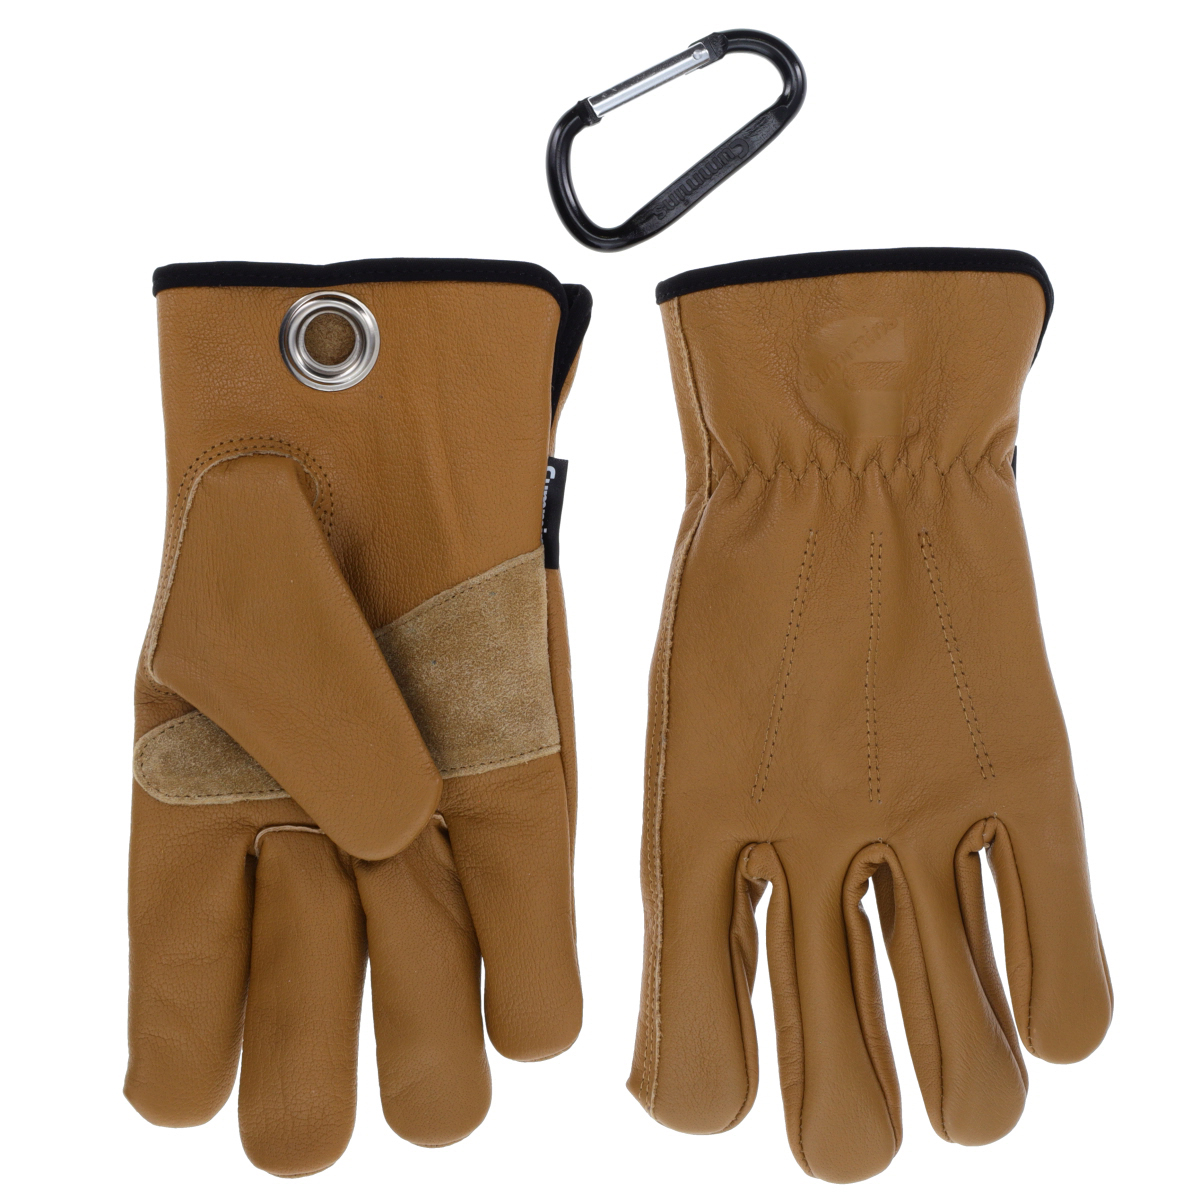 Cummins Full Leather Gloves for Men CMN35115 - Fencer Work Leather Palm Gloves for Truck Driving Gardening Outdoor Work - XL